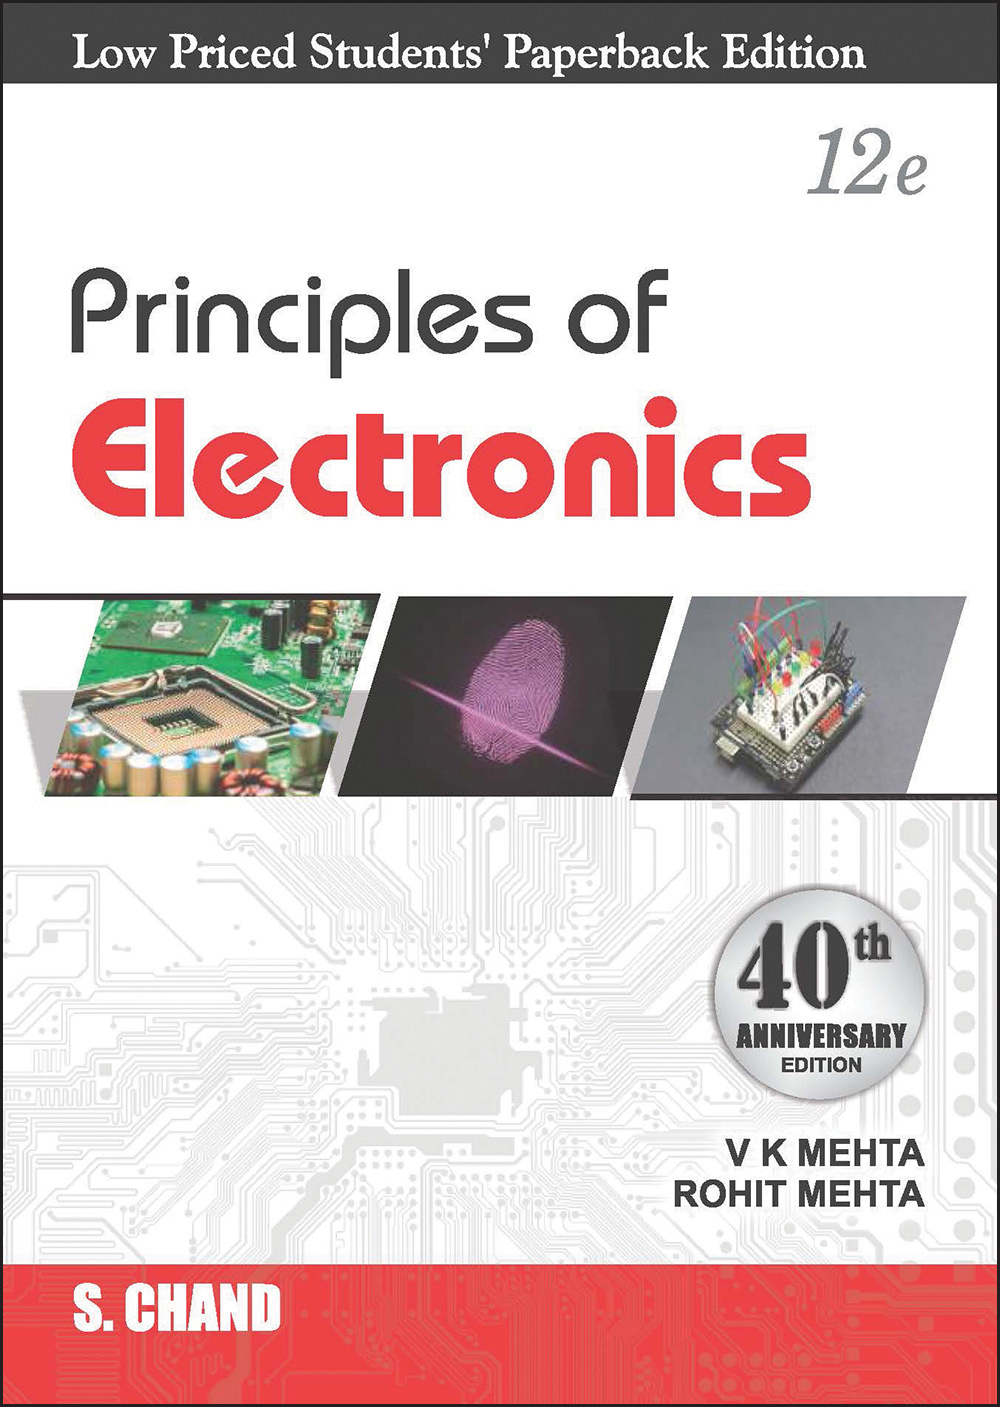 Principles of Electronics,(LPSPE)